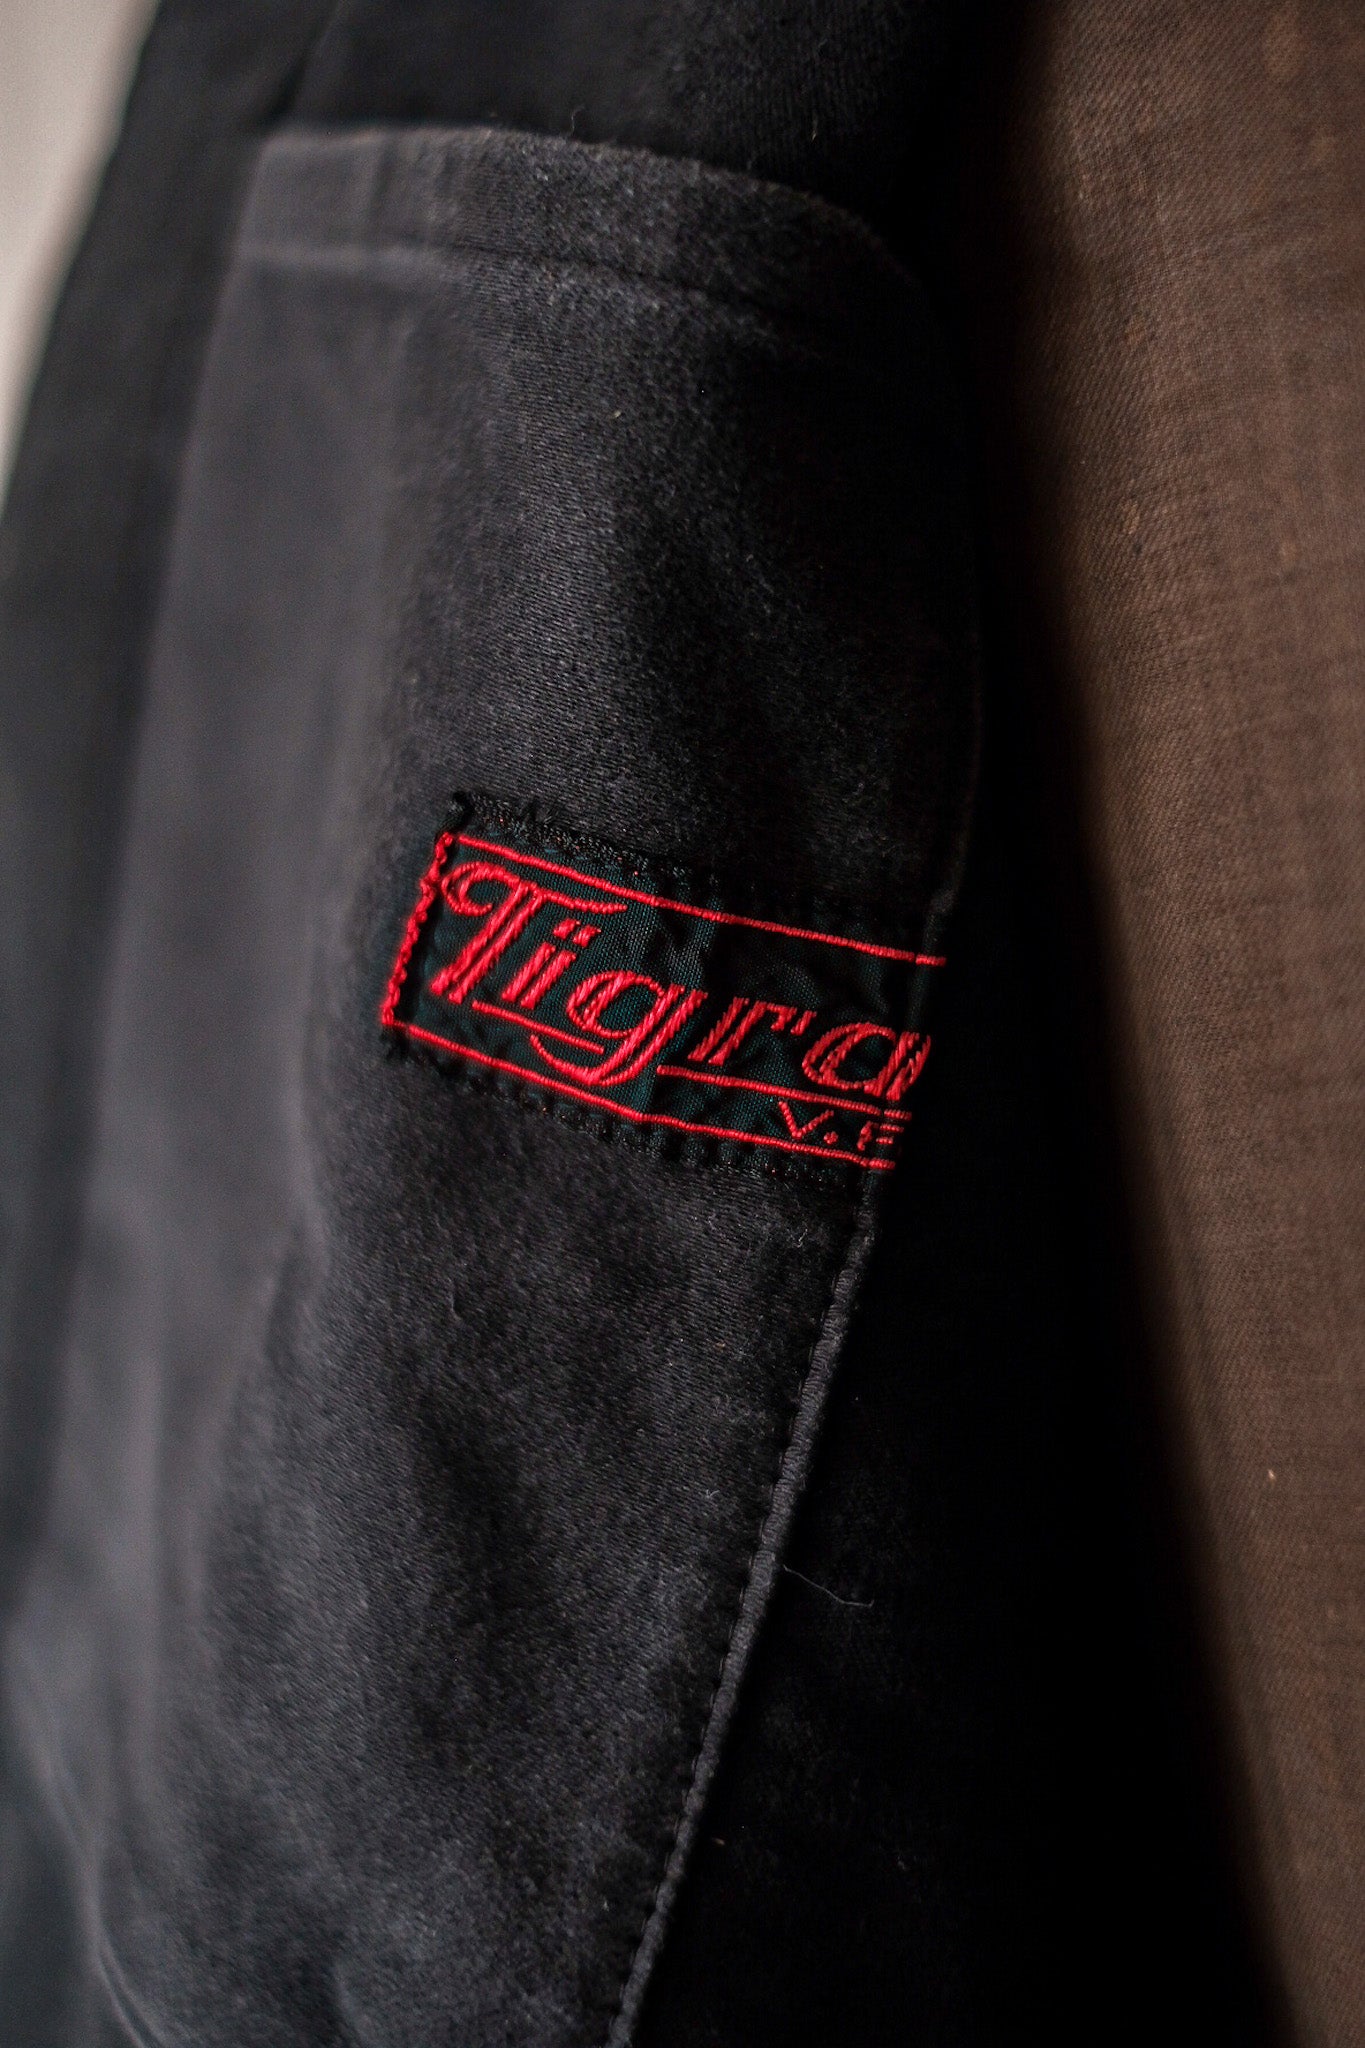 【~40's】French Vintage Black Moleskin Work Jacket